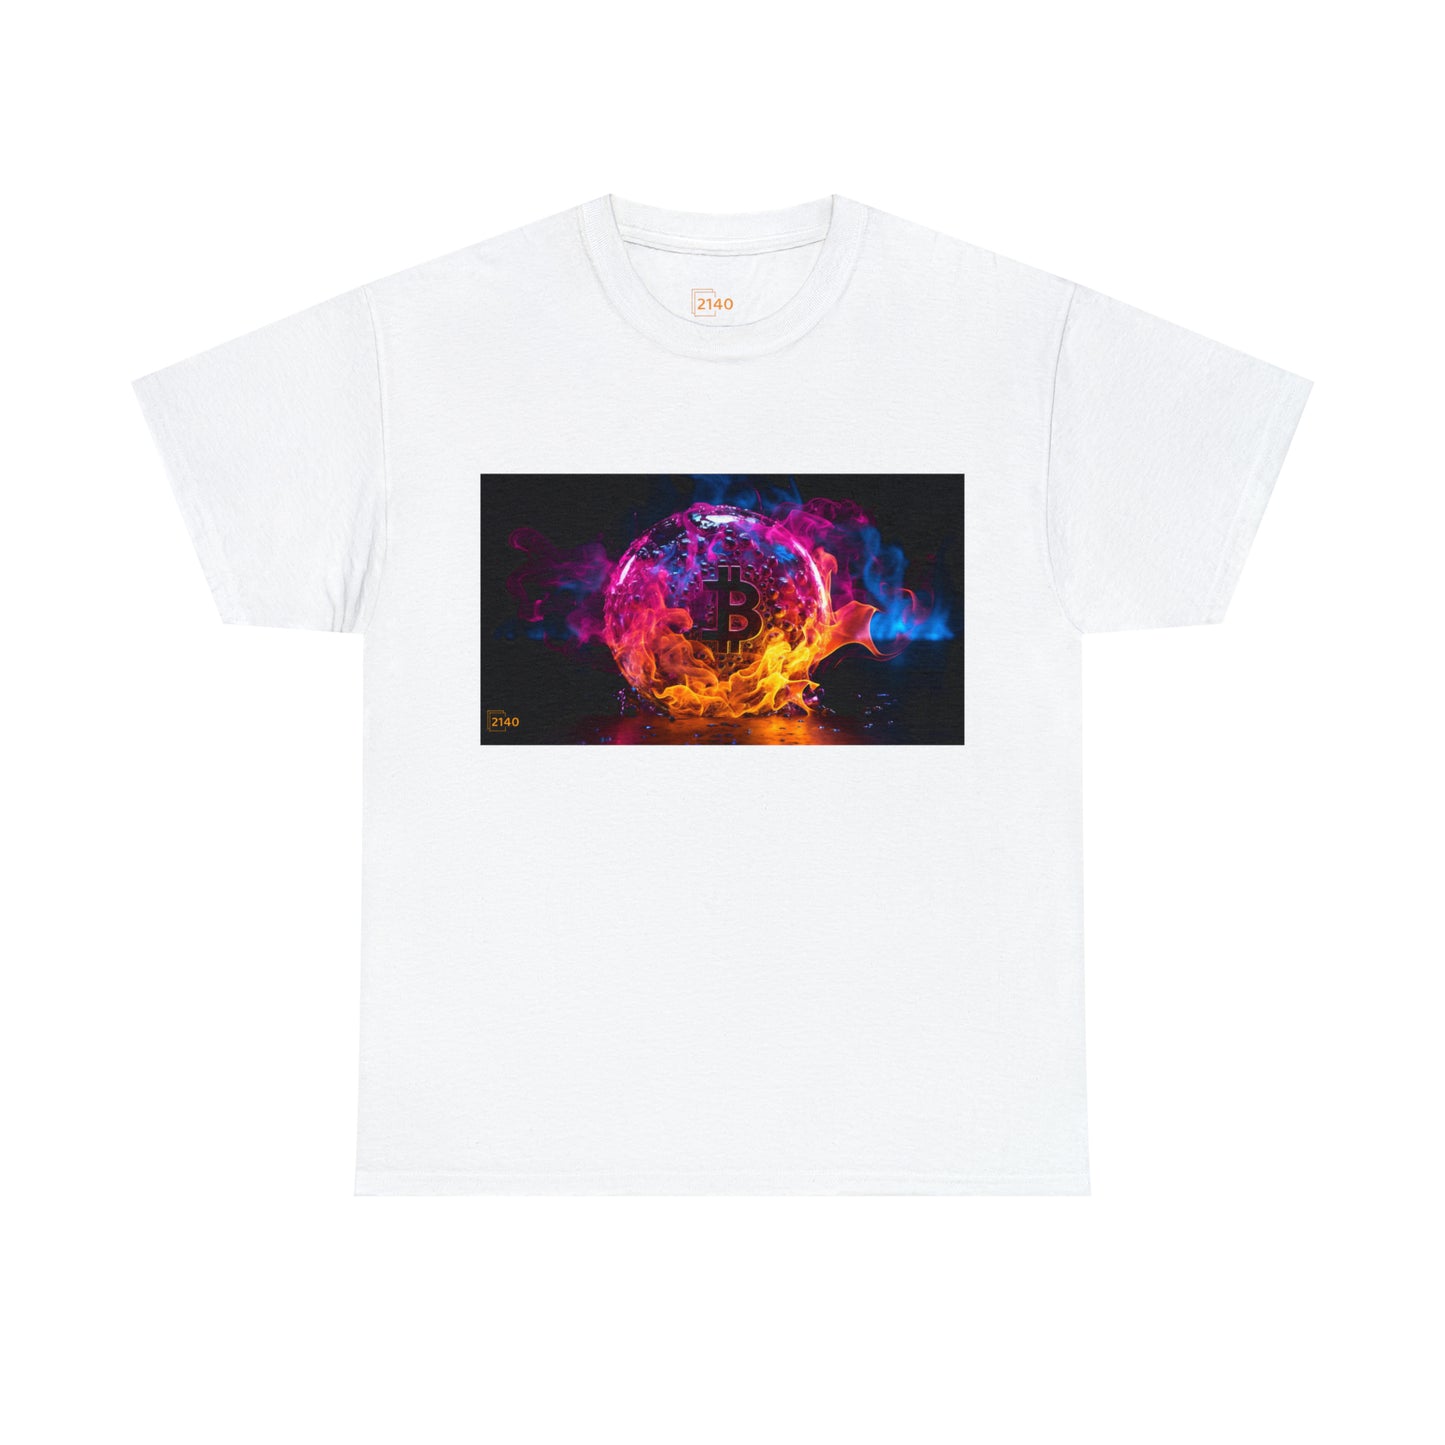 Bitcoin Fireball T-shirt 👕